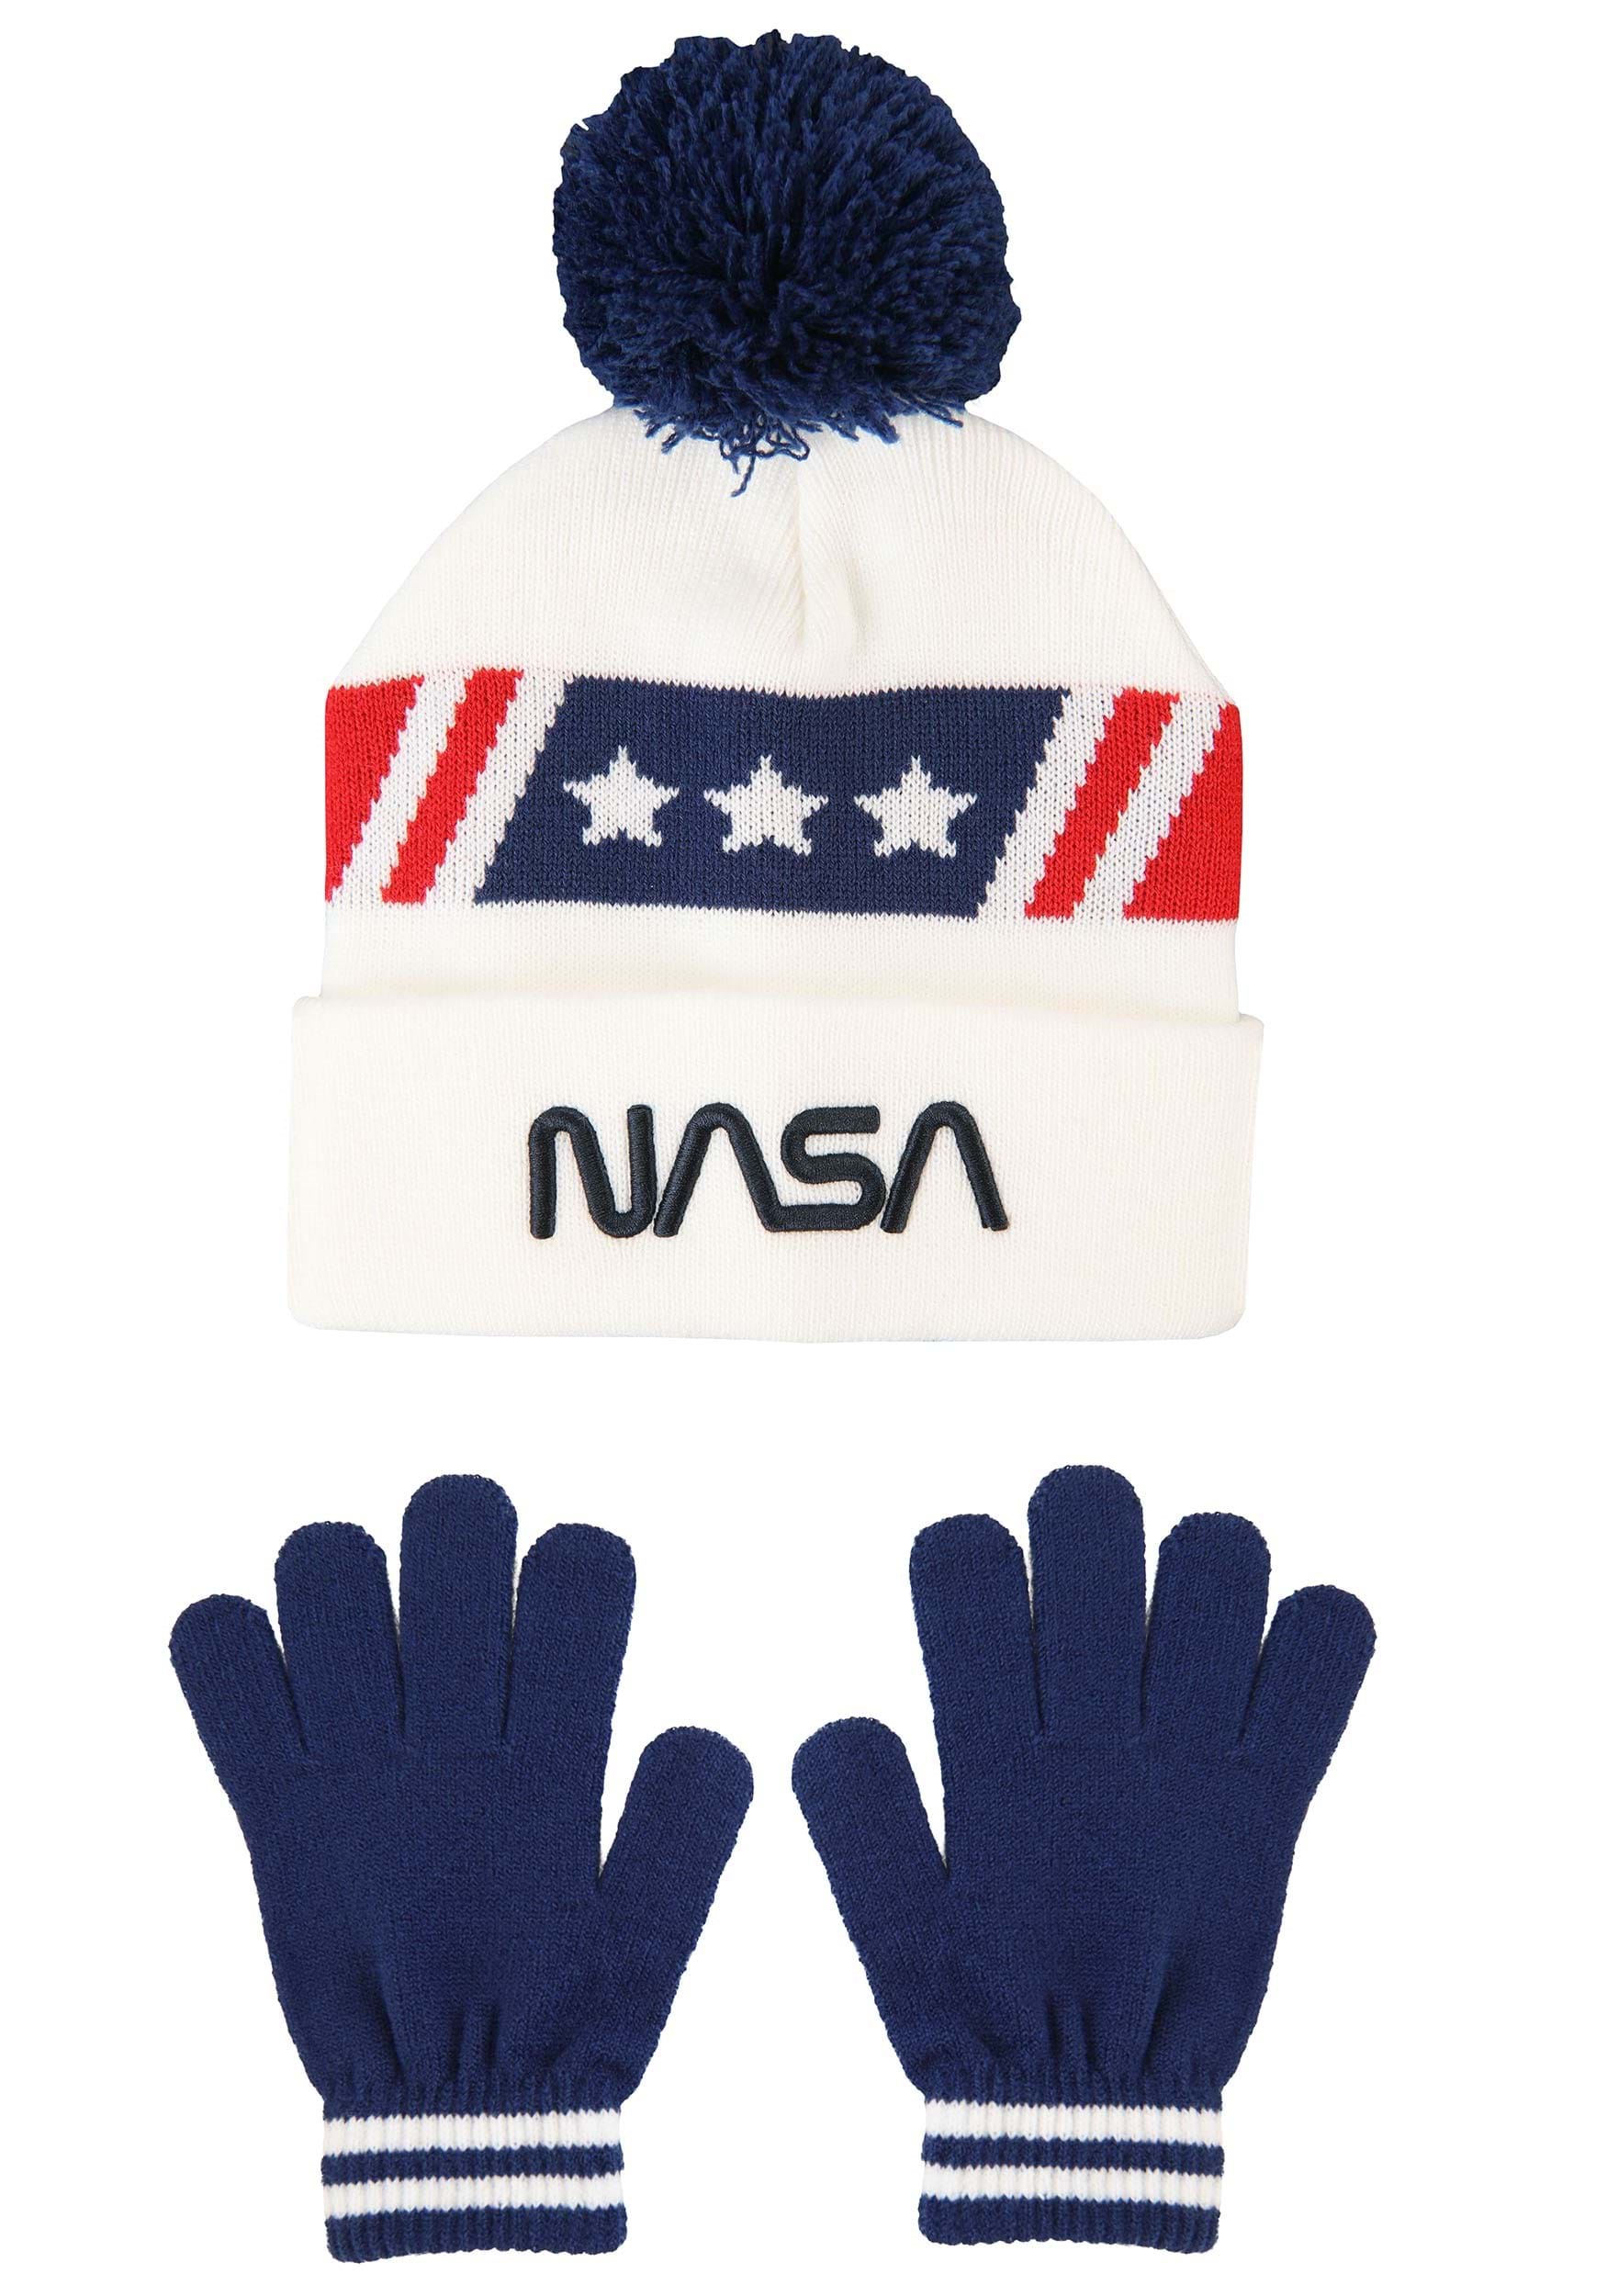 Hat and Glove Set for NASA Kids